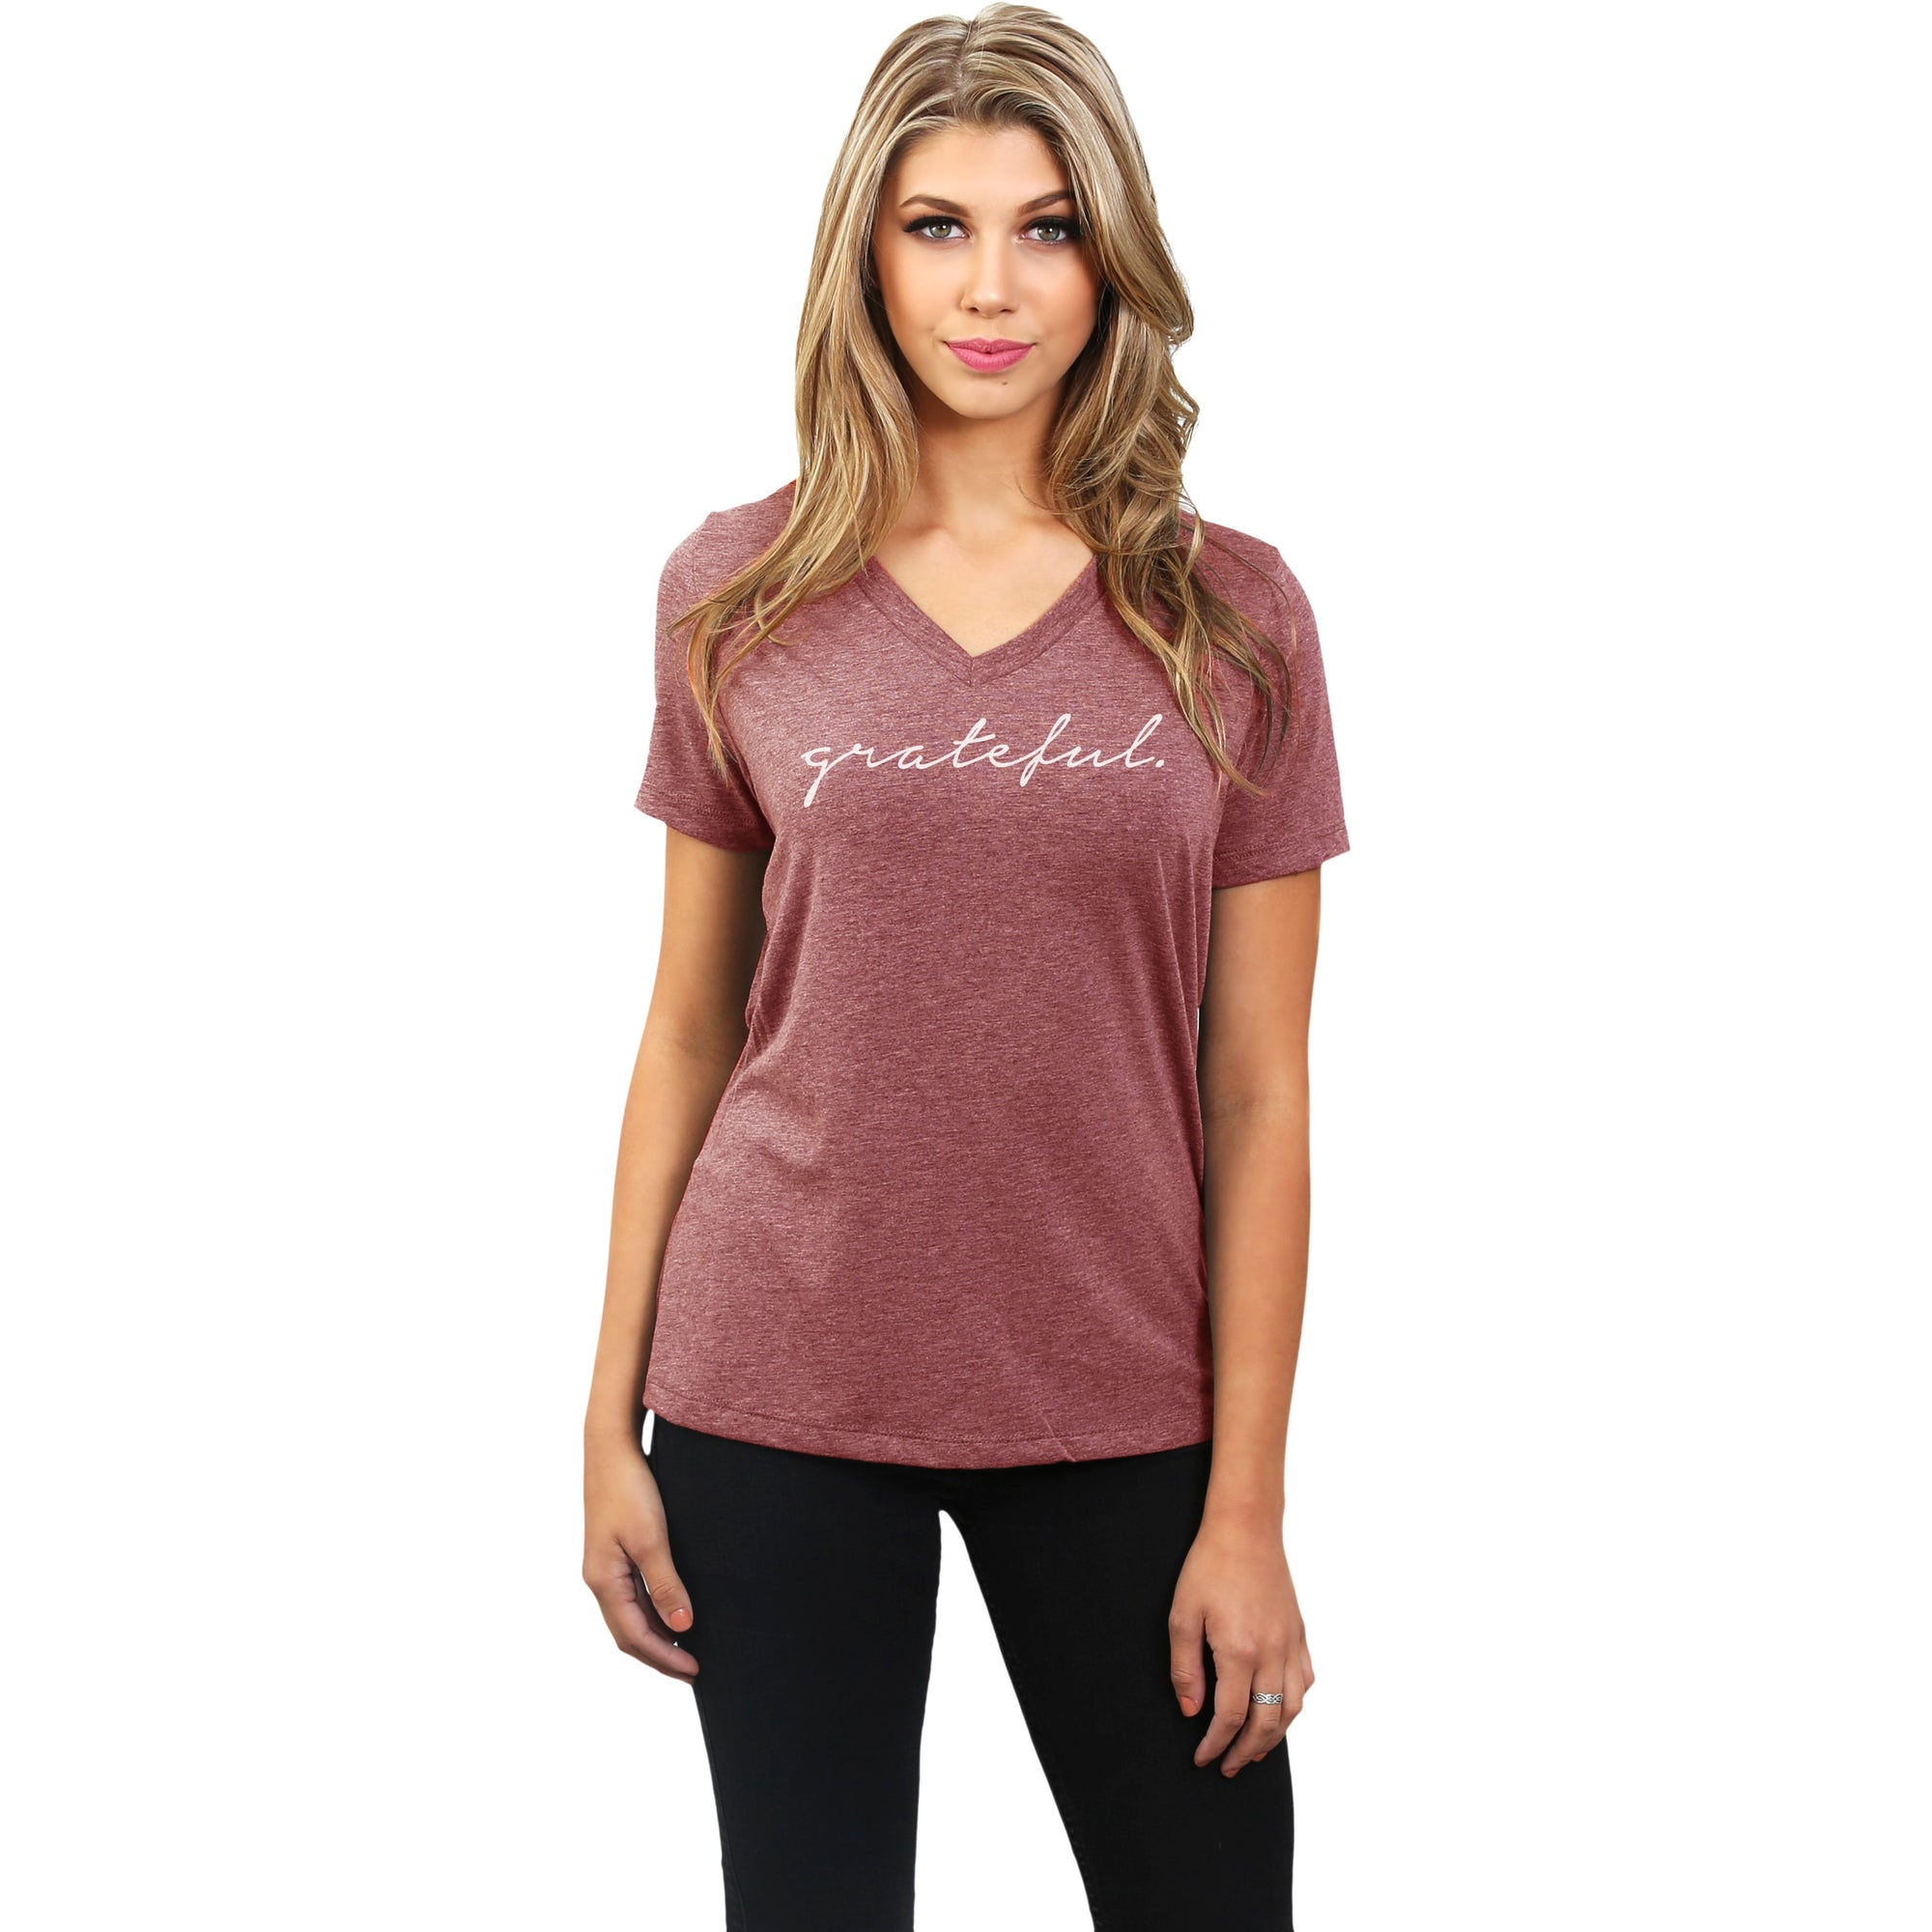 Grateful Women's Relaxed V-Neck T-Shirt Tee Heather Black